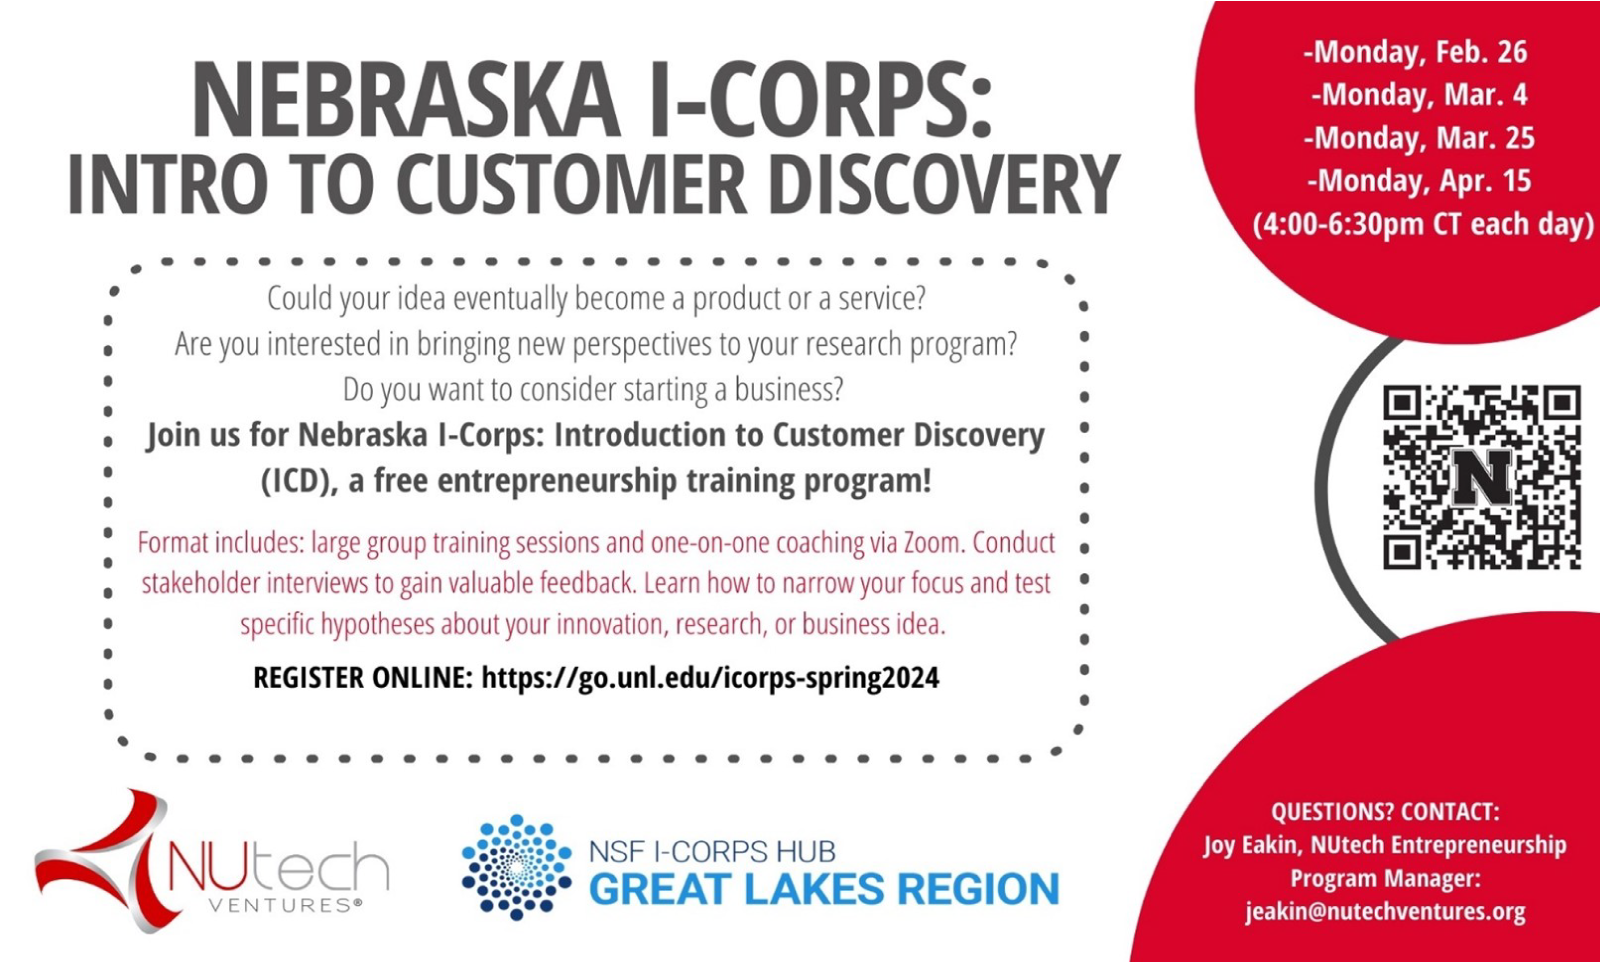 The Nebraska I-Corps program is part of the NSF Great Lakes I-Corps Hub